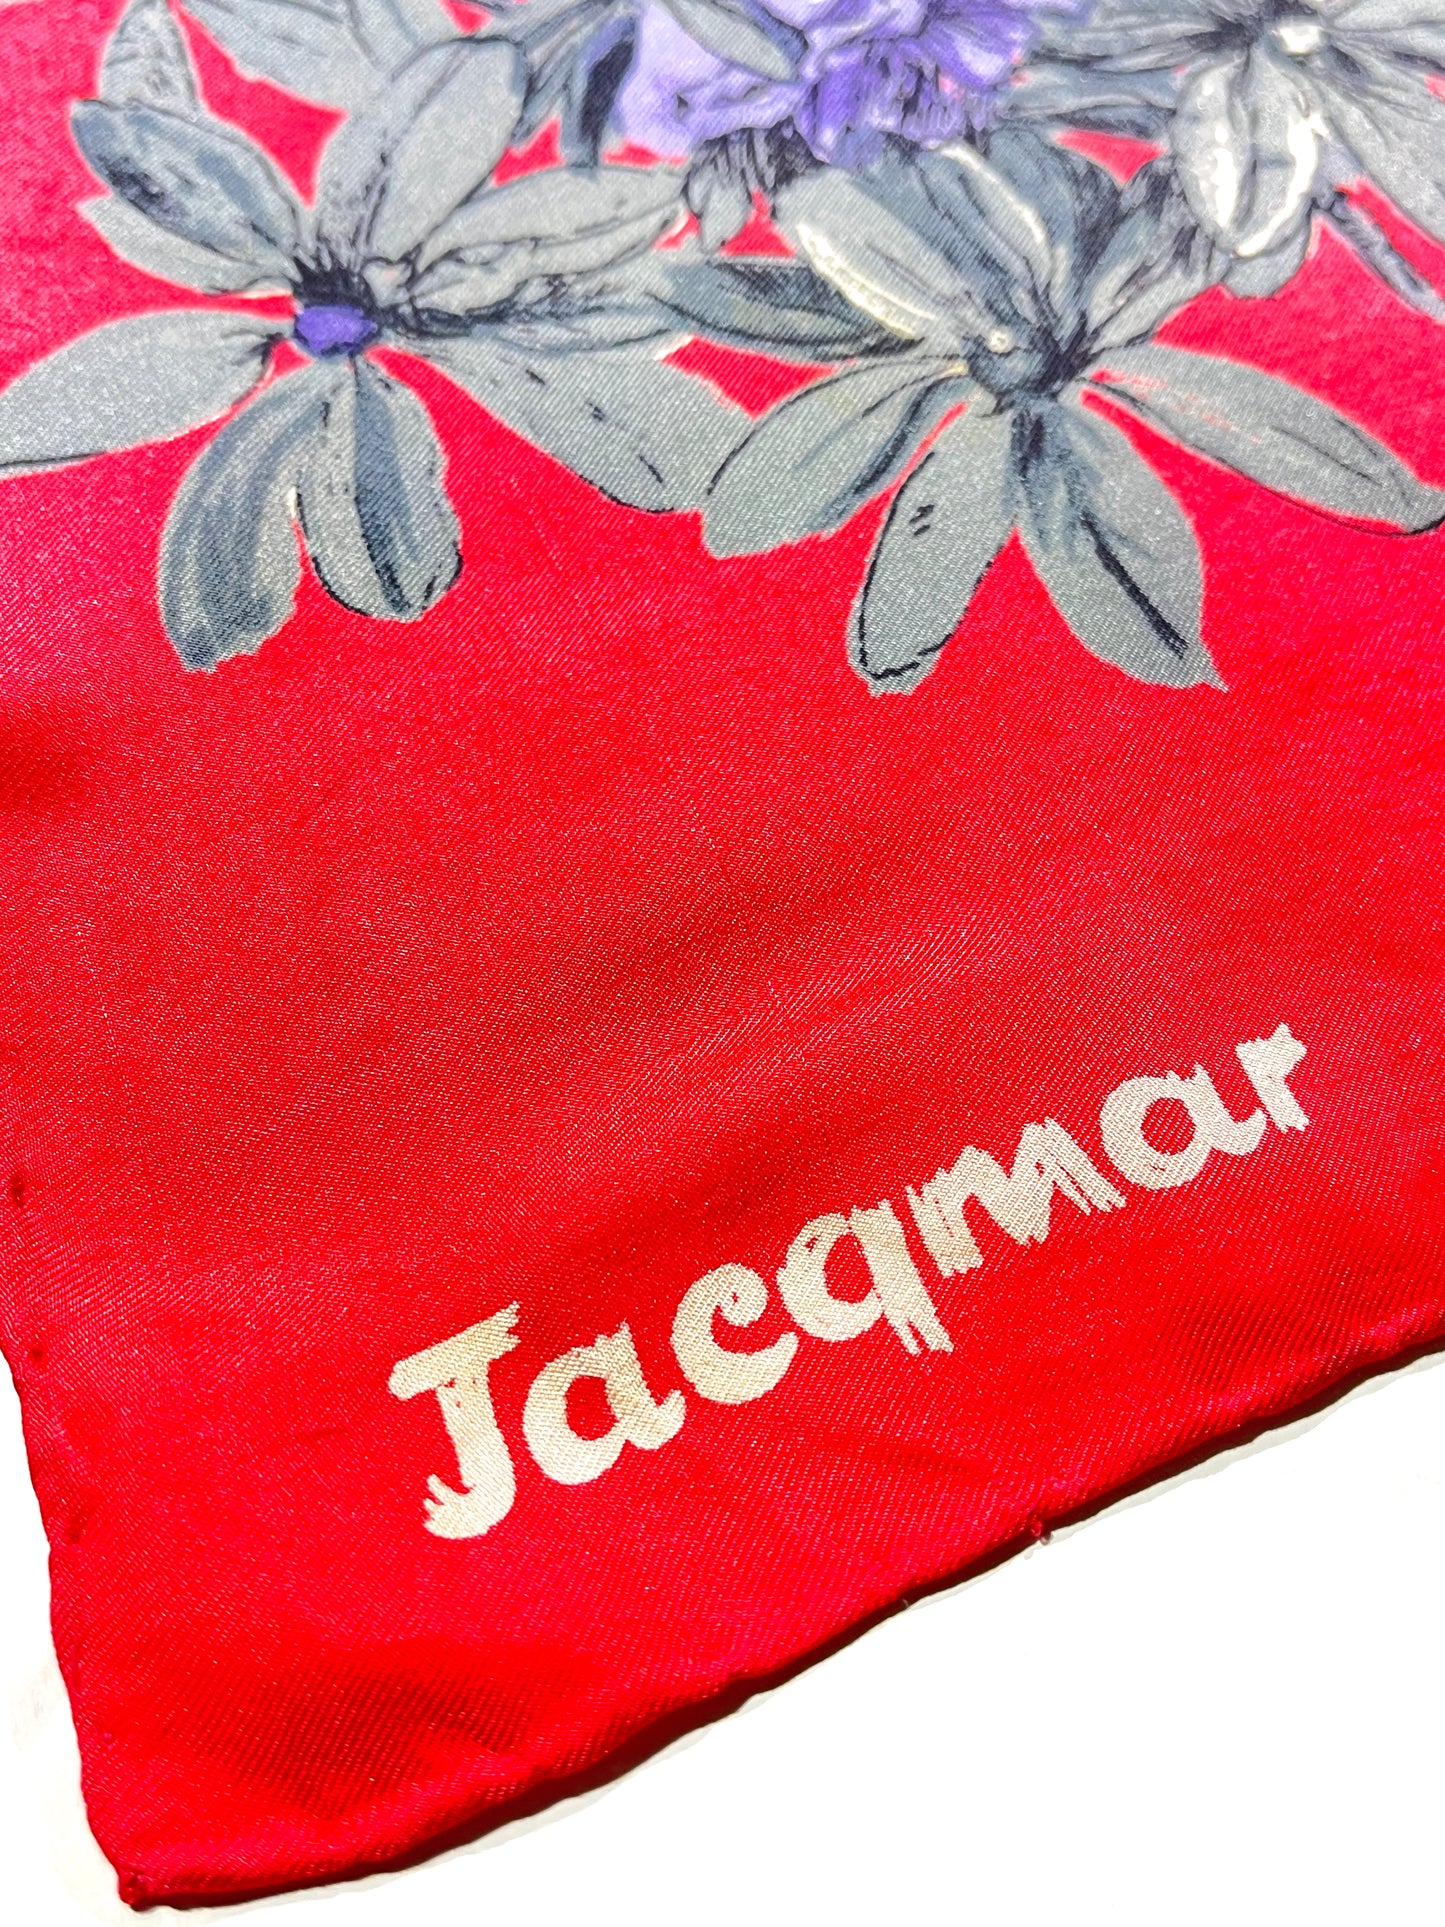 Vintage Jacqmar Silk Scarf